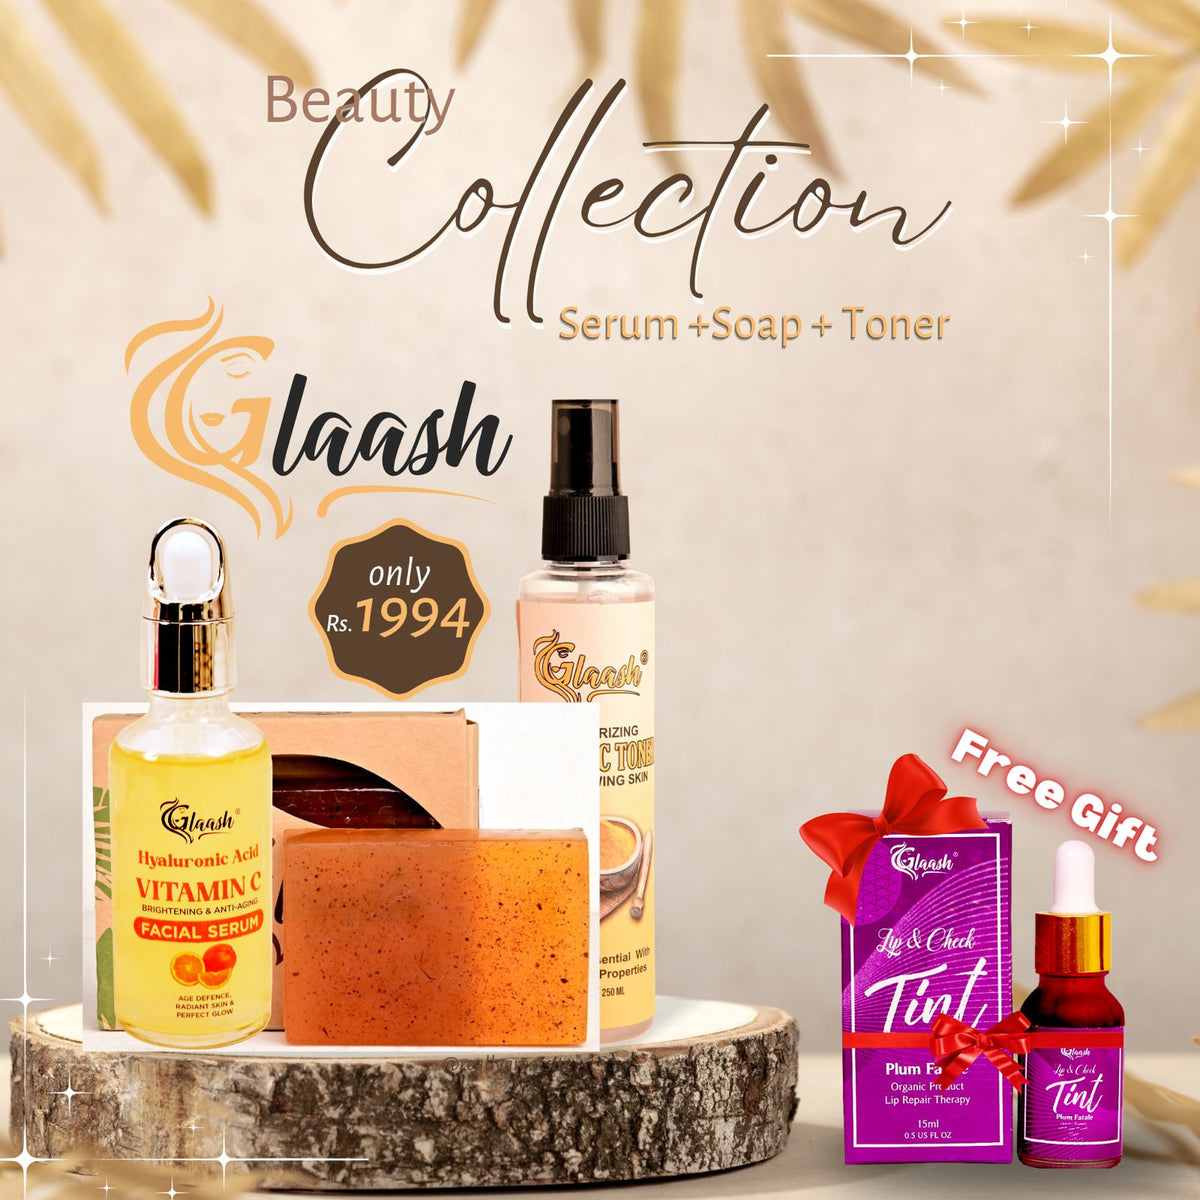 Glaash Pack of 03 Serum + Soap + Toner (with Free Gift Plum Fatale Tint) | Vitamin C Facial Serum + Turmeric Organic Soap + Turmeric Toner + Gift Plum Fatale Tint